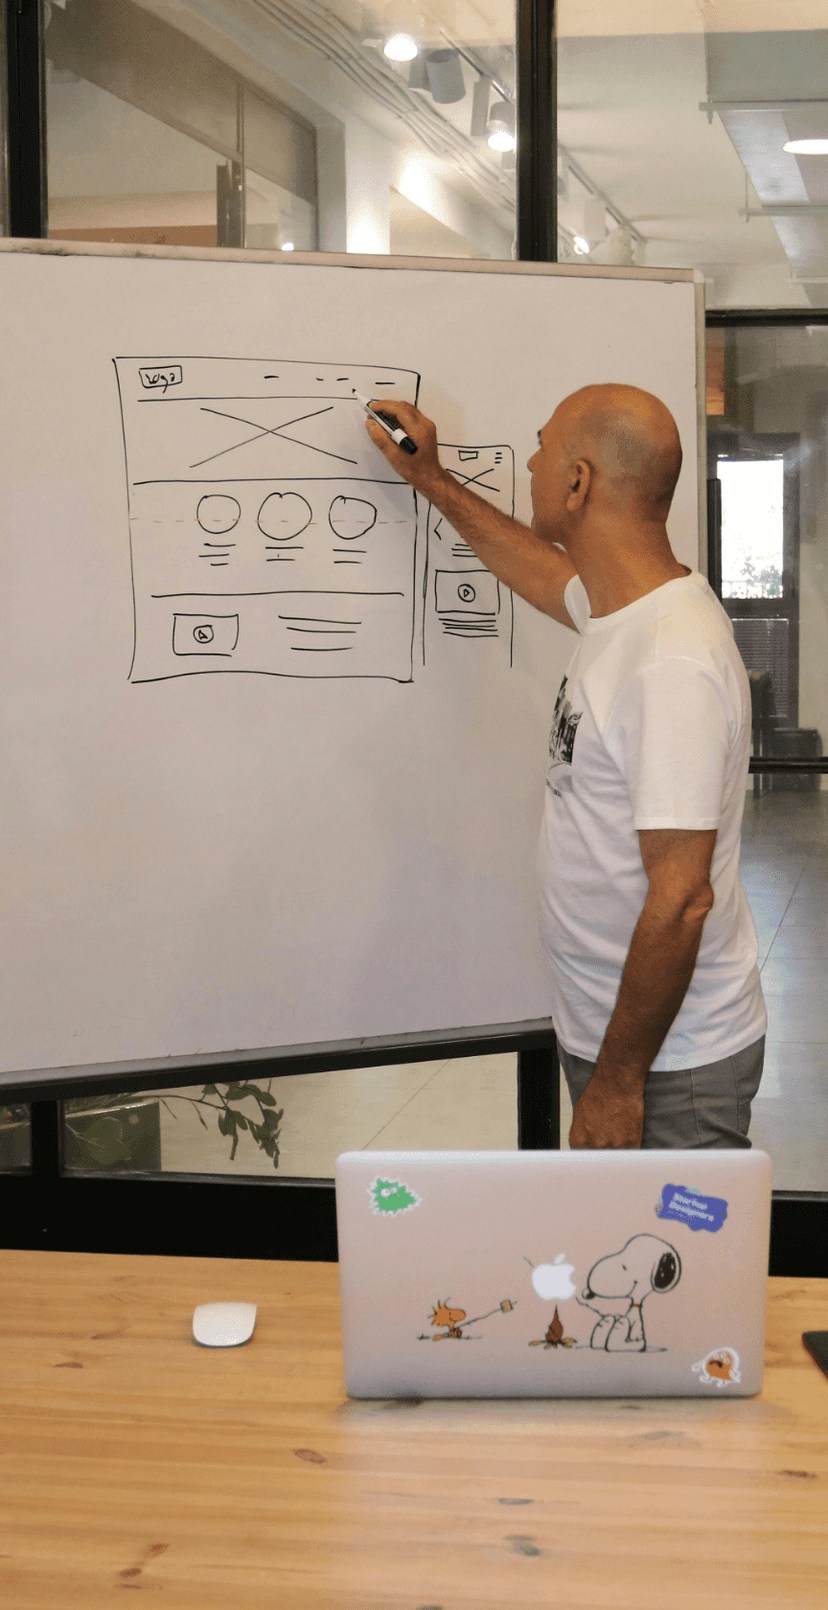 Person presenting UI design on whiteboard